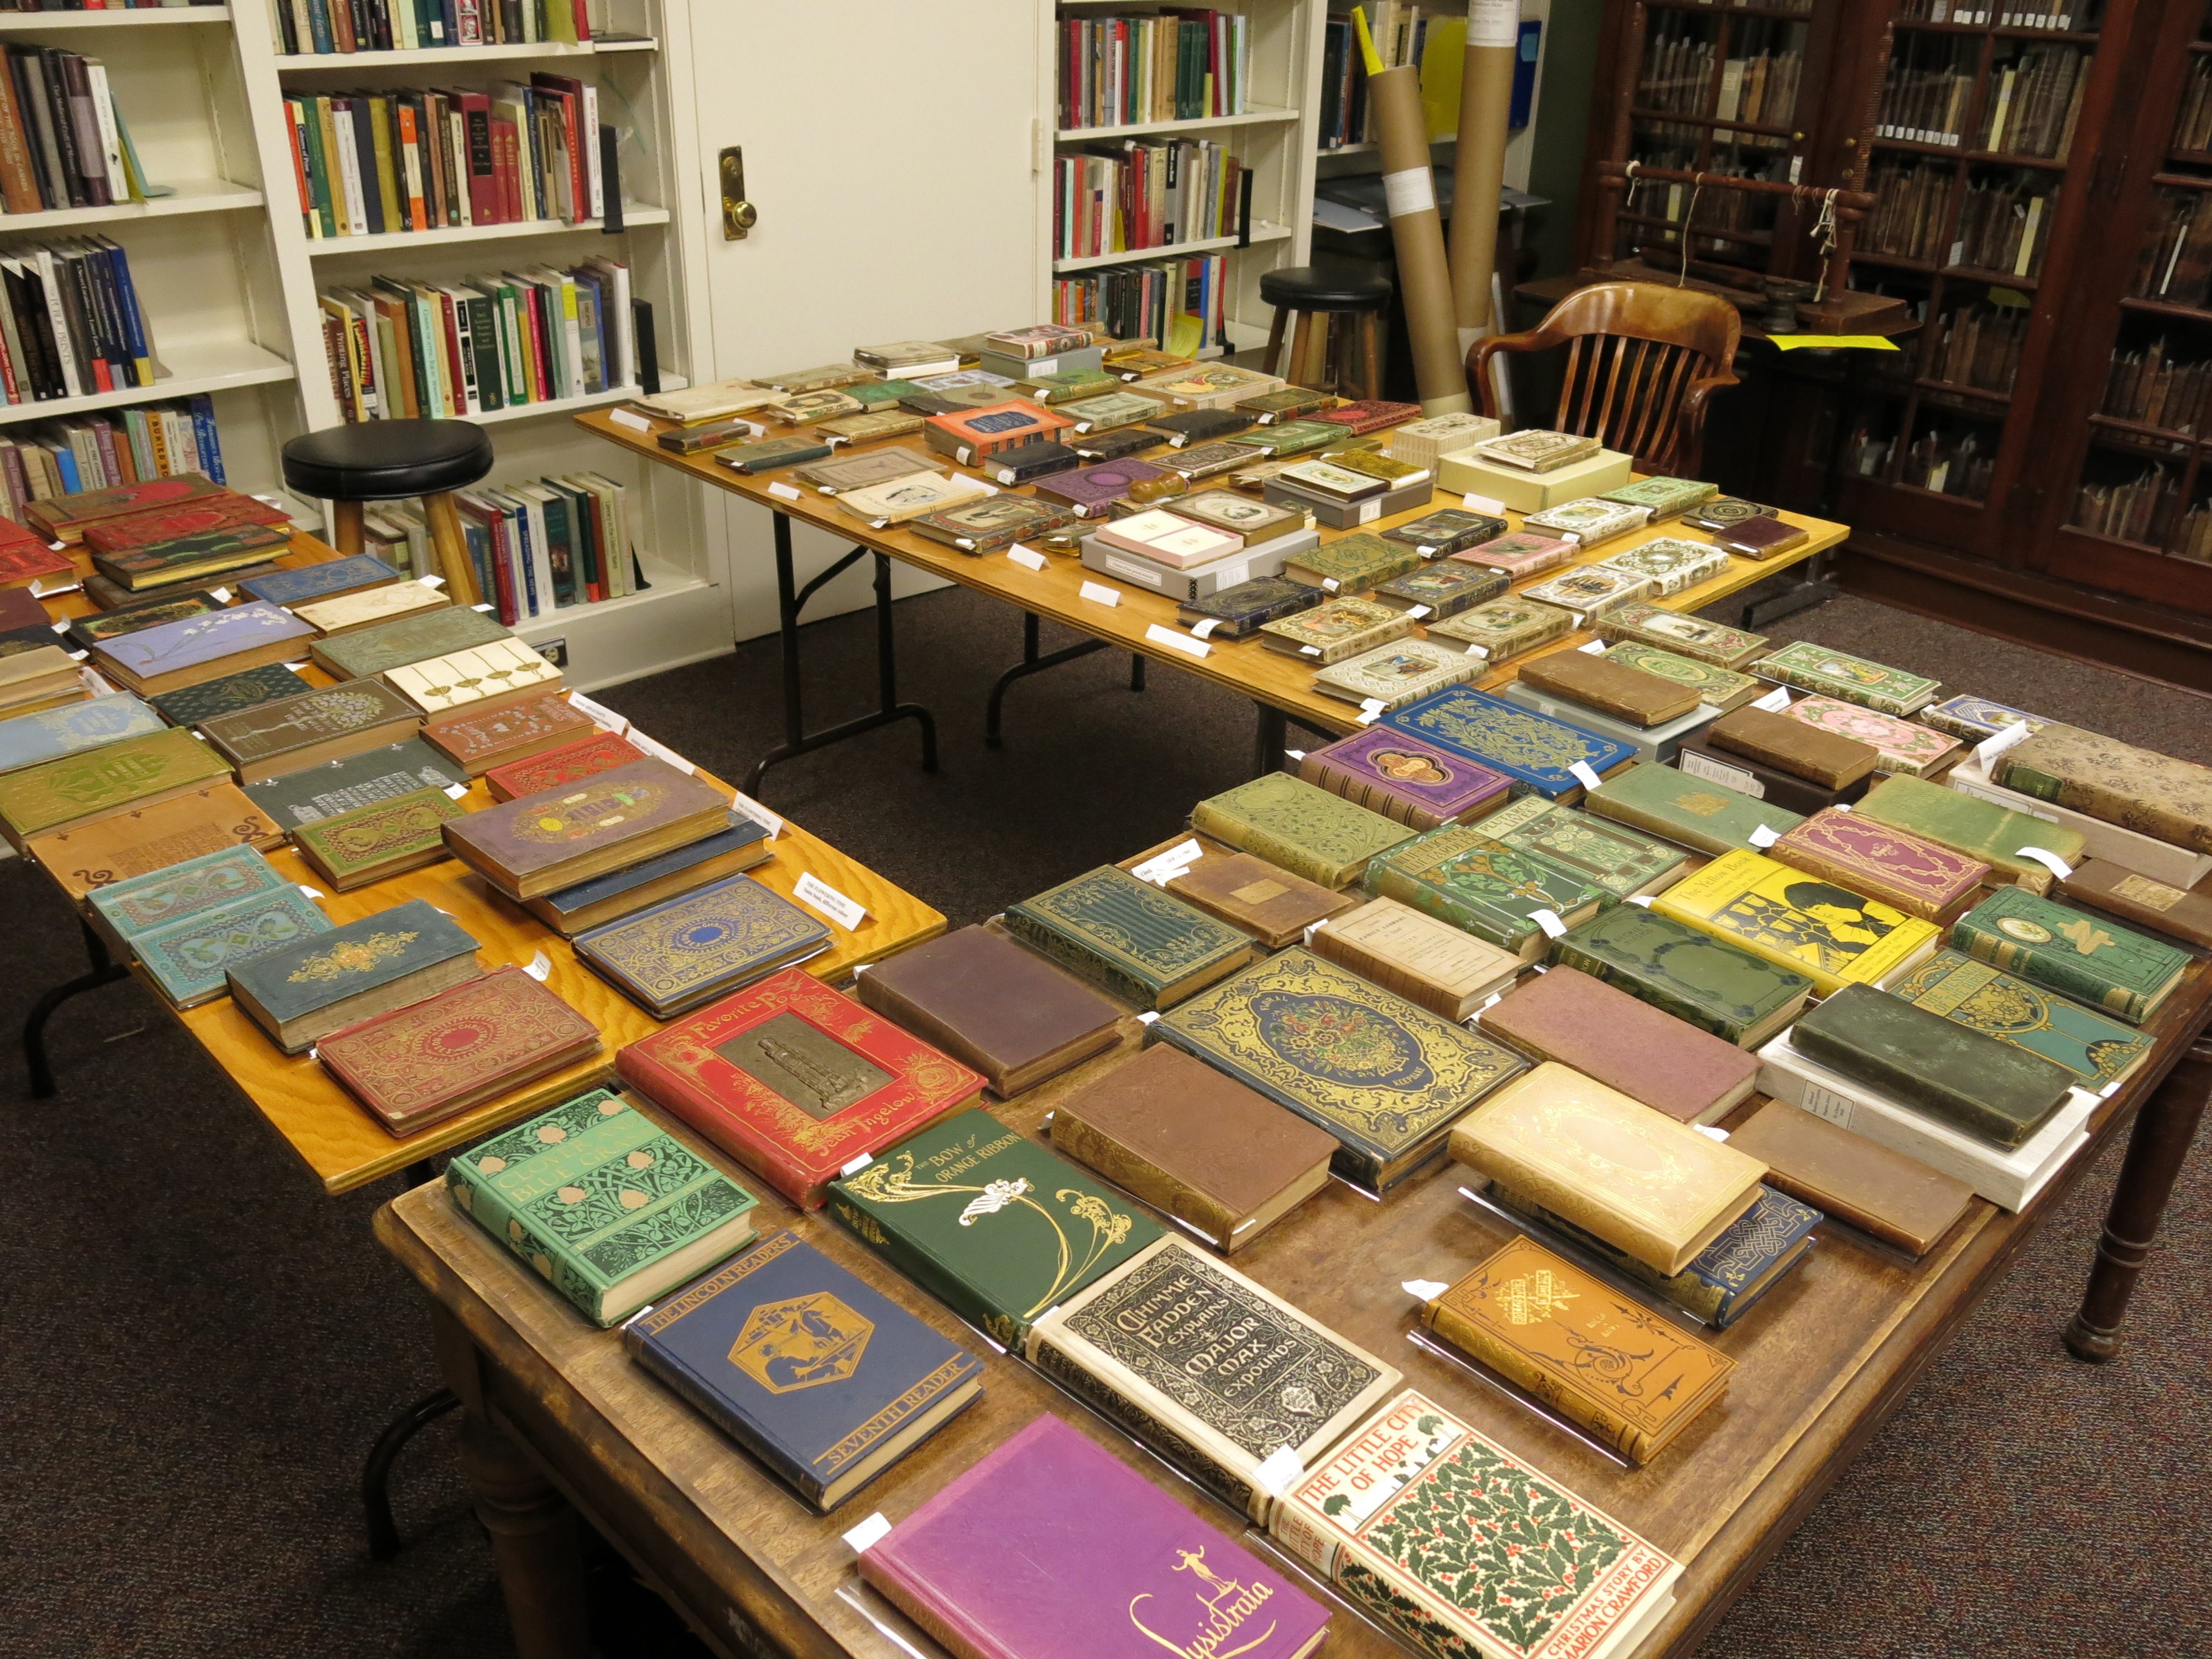 The Philadelphia Rare Books & Manuscripts Company